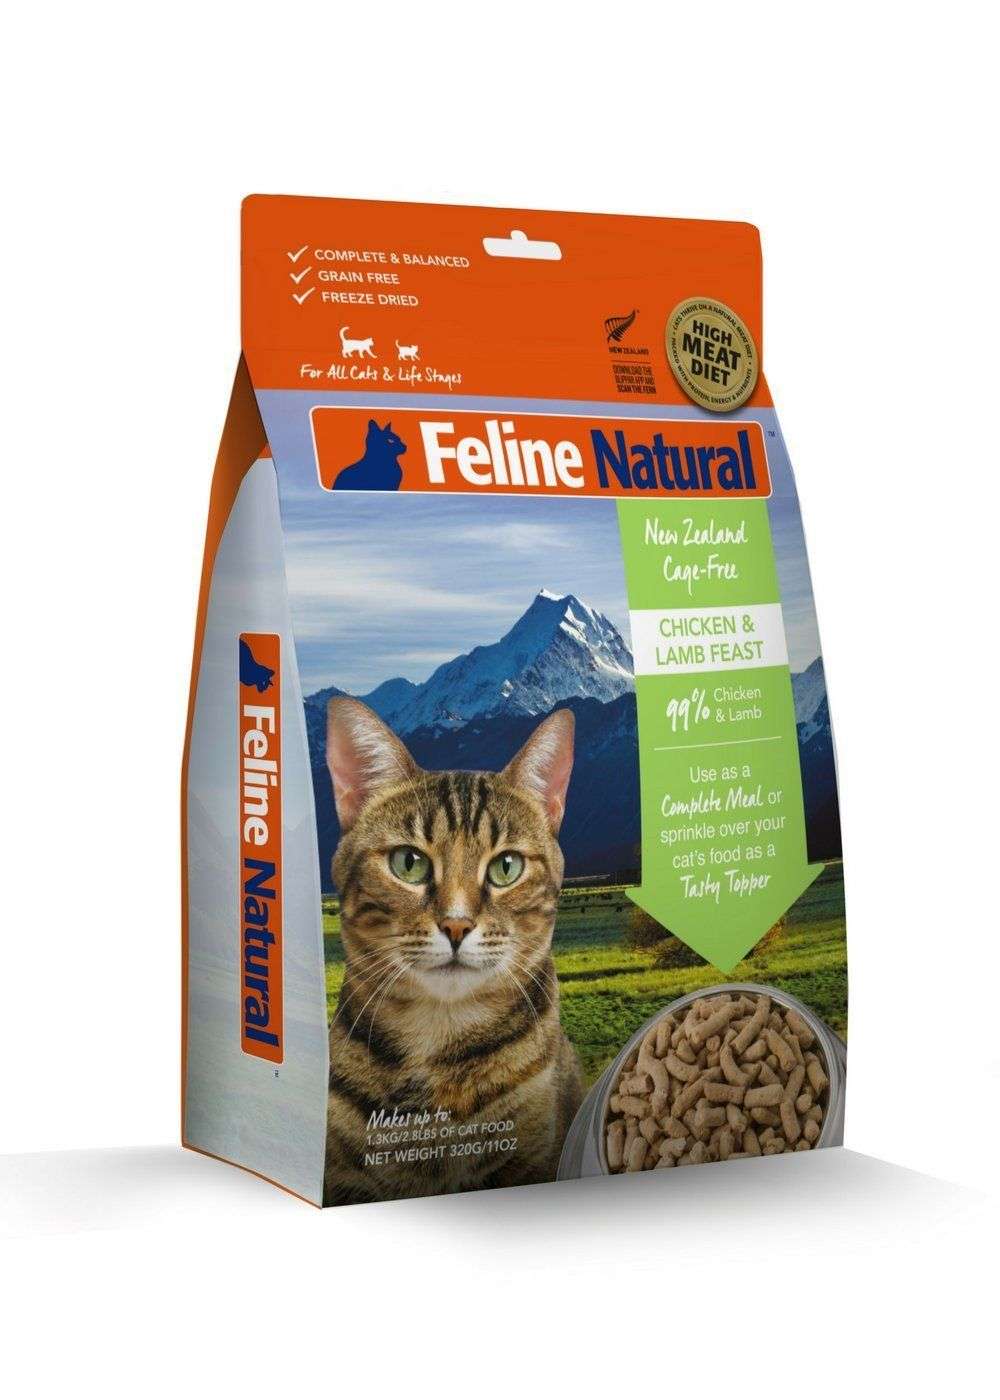 Feline Natural Freeze Dried Cat Food